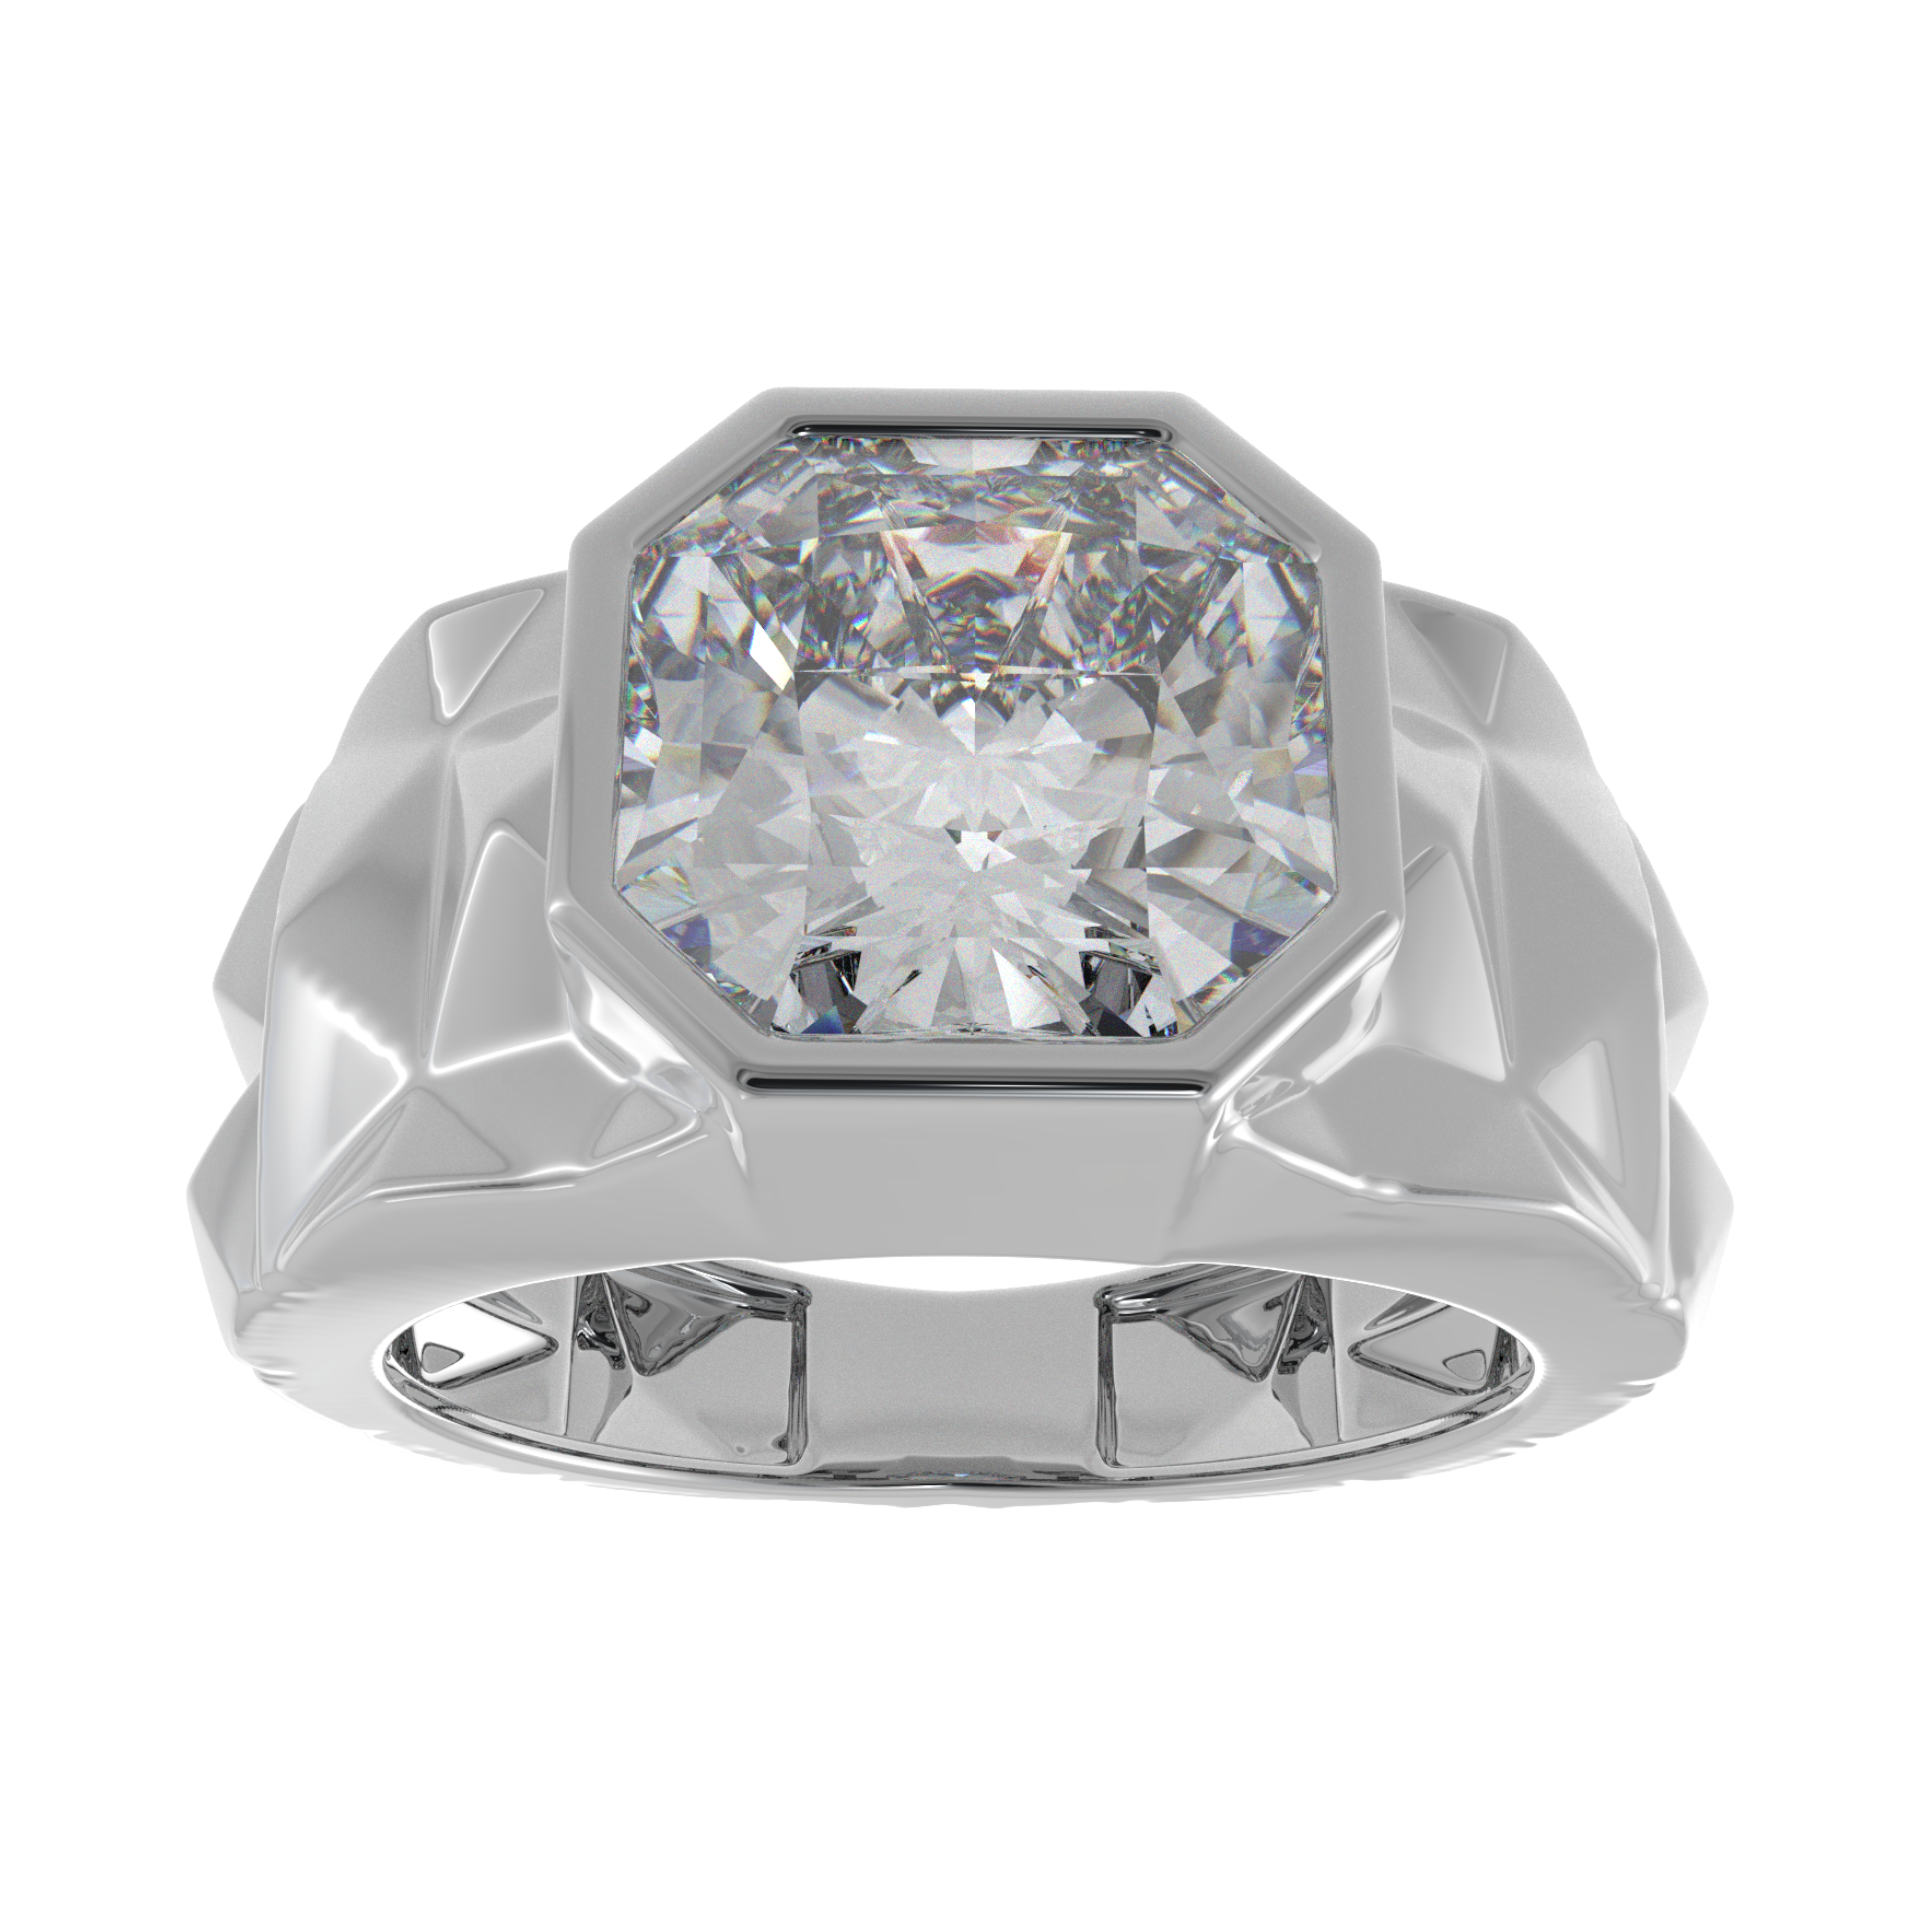 Shop for Silver Designer Ring Online - Tiny Flower Finger Ring Quirksmith